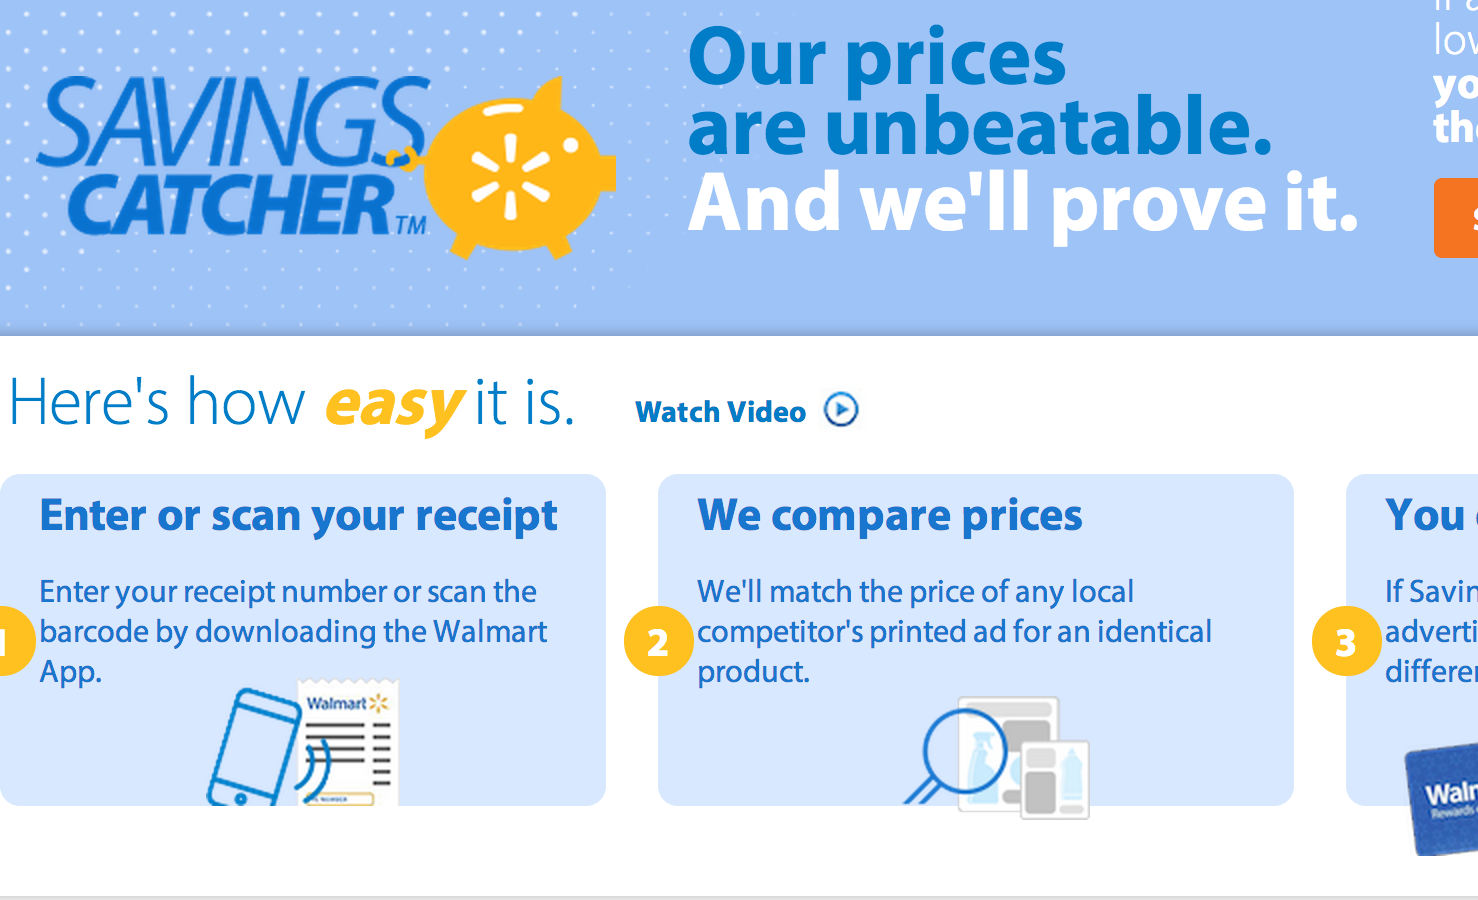 Does Walmart’s “Savings Catcher” Actually Work?